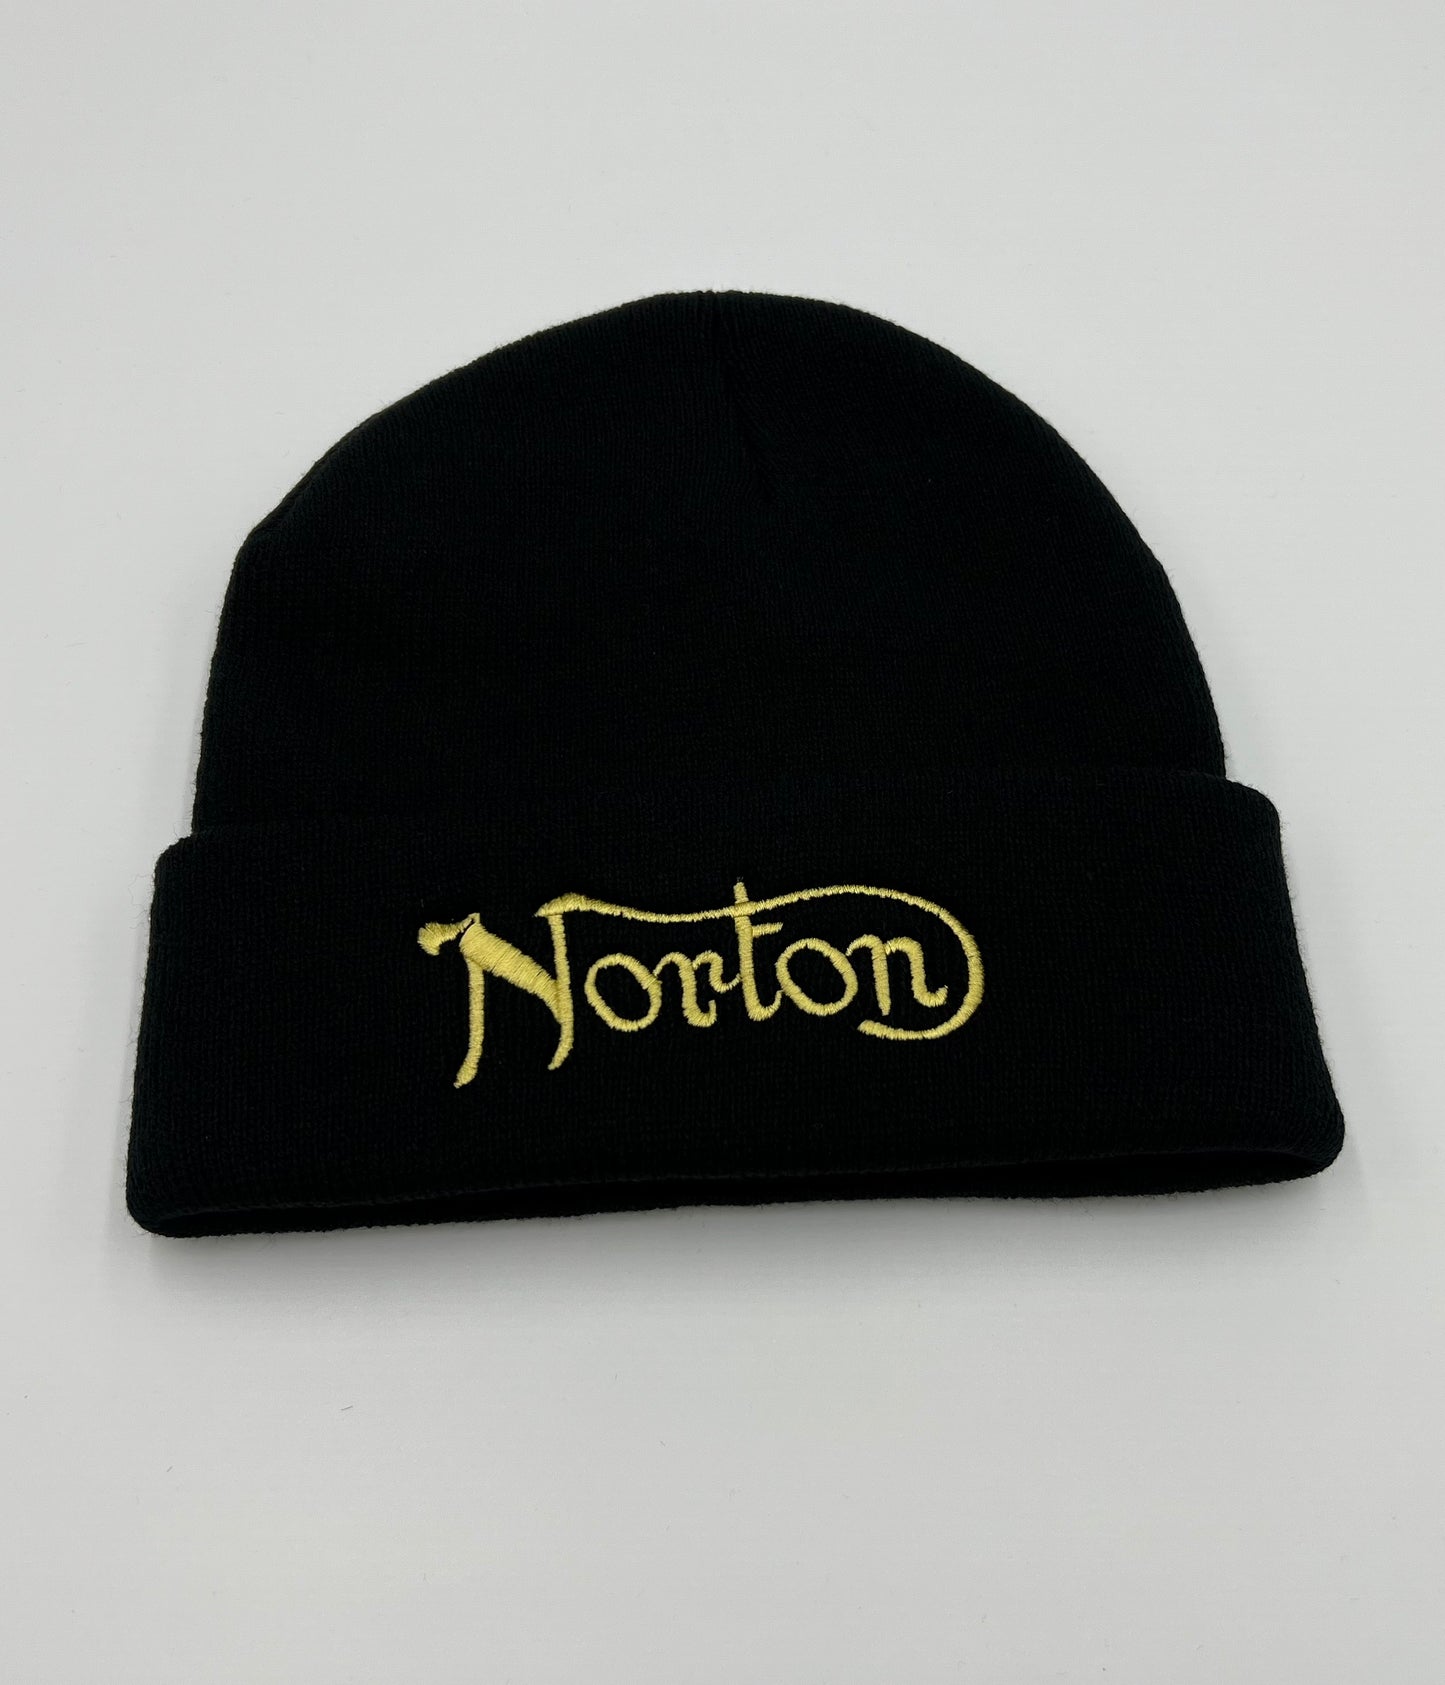 Norton Embroidered Beanie